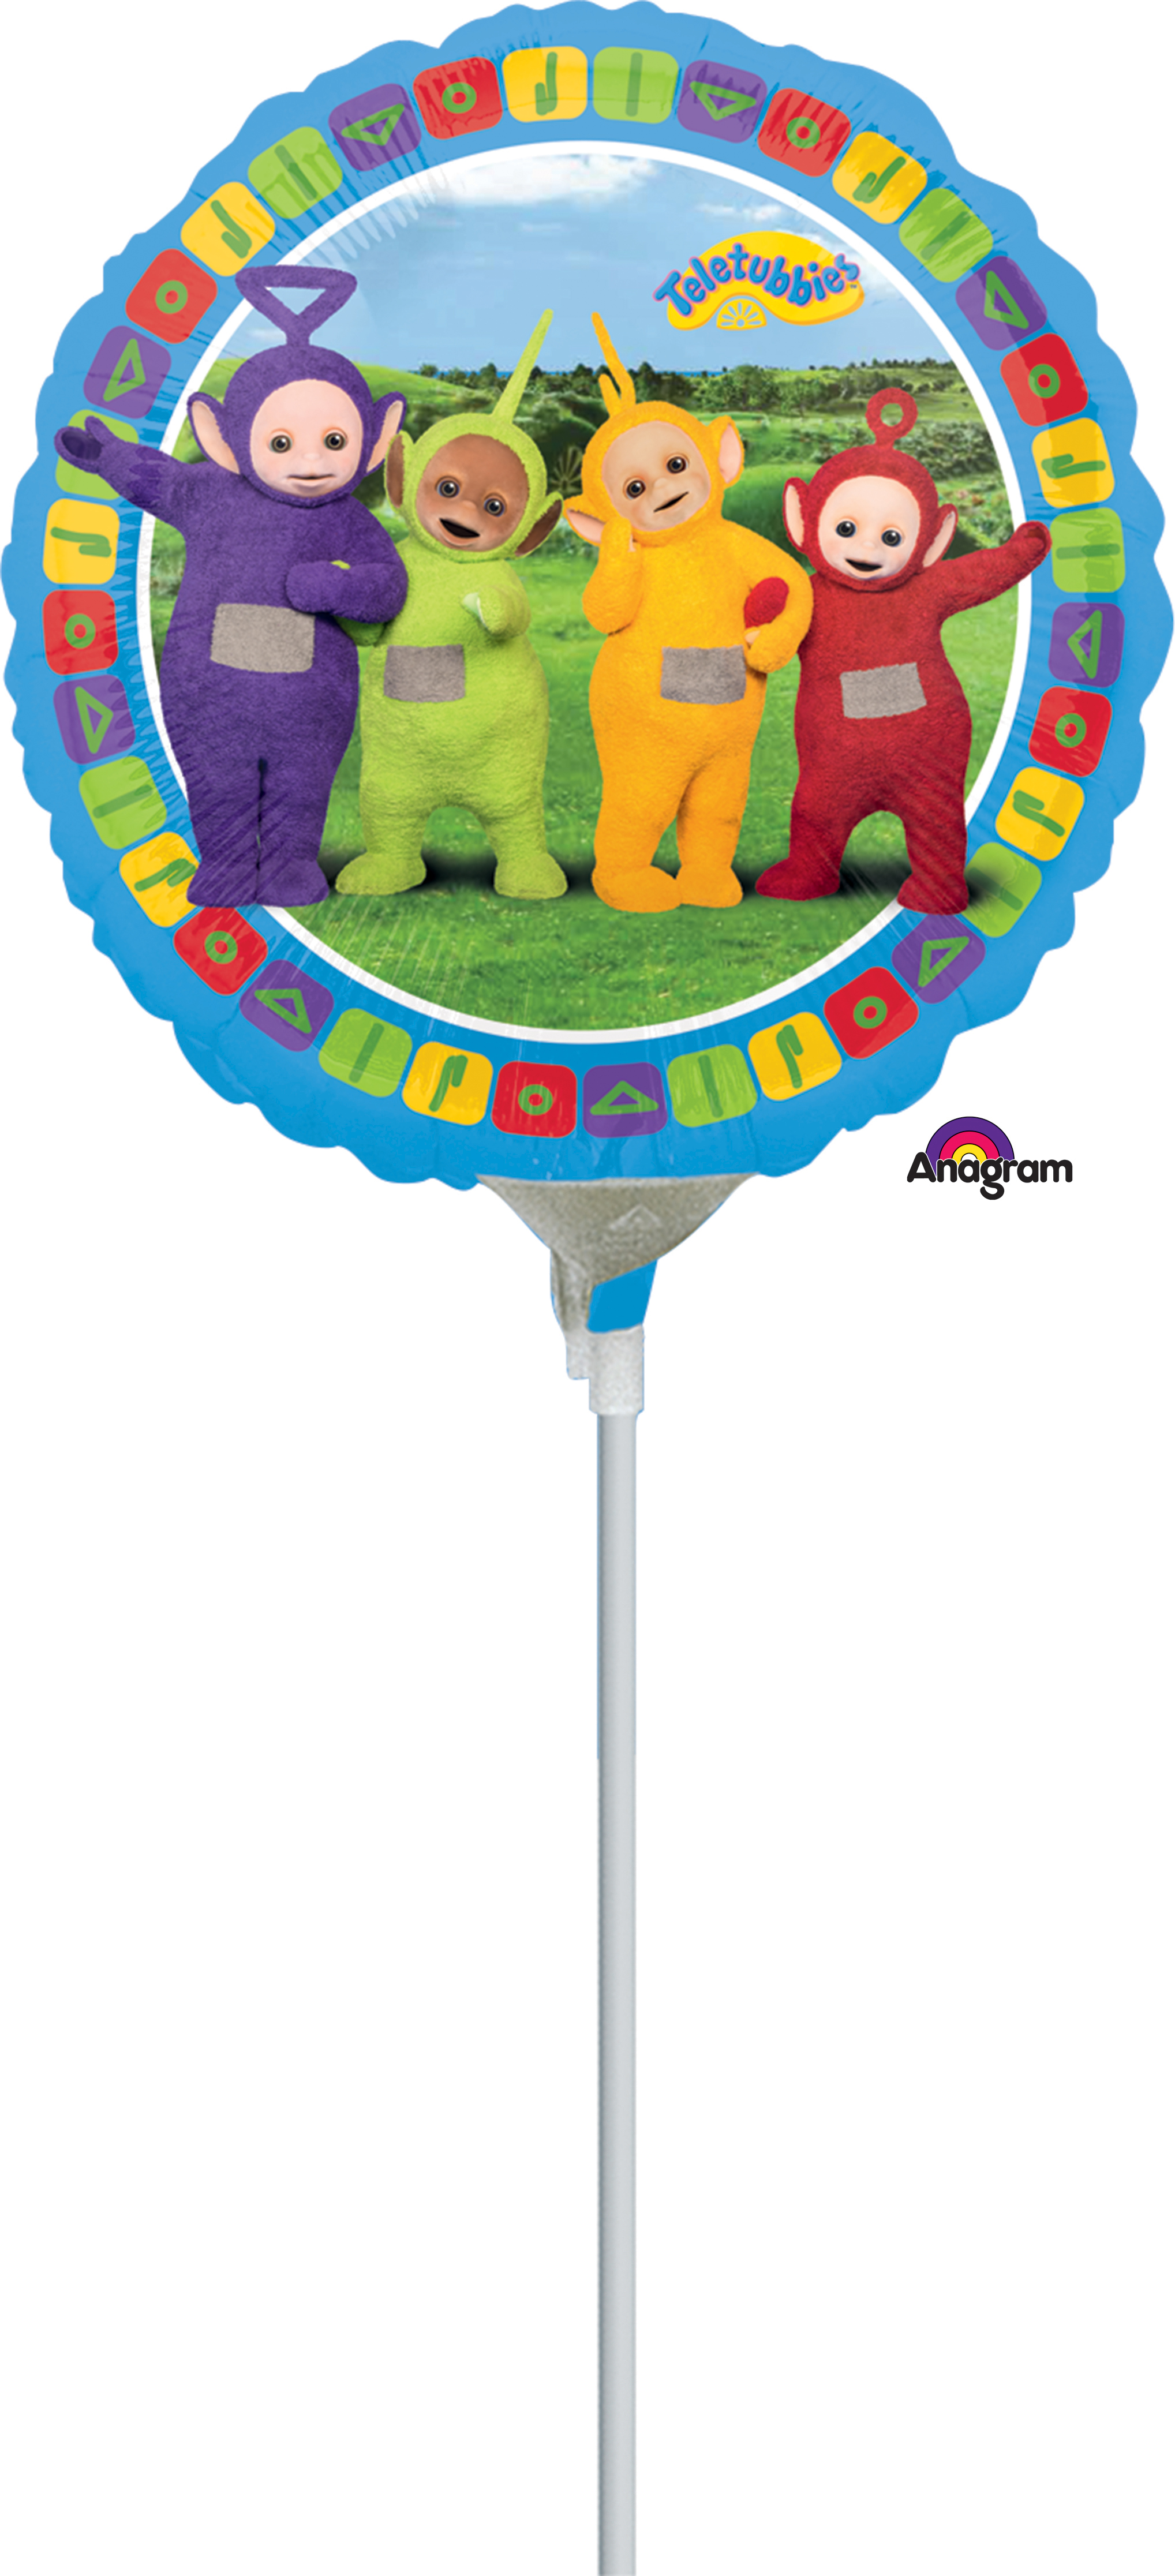 Panda Balloon Foil Balloon Happy Birthday Party Decor Kids Inflatable Toy JB 